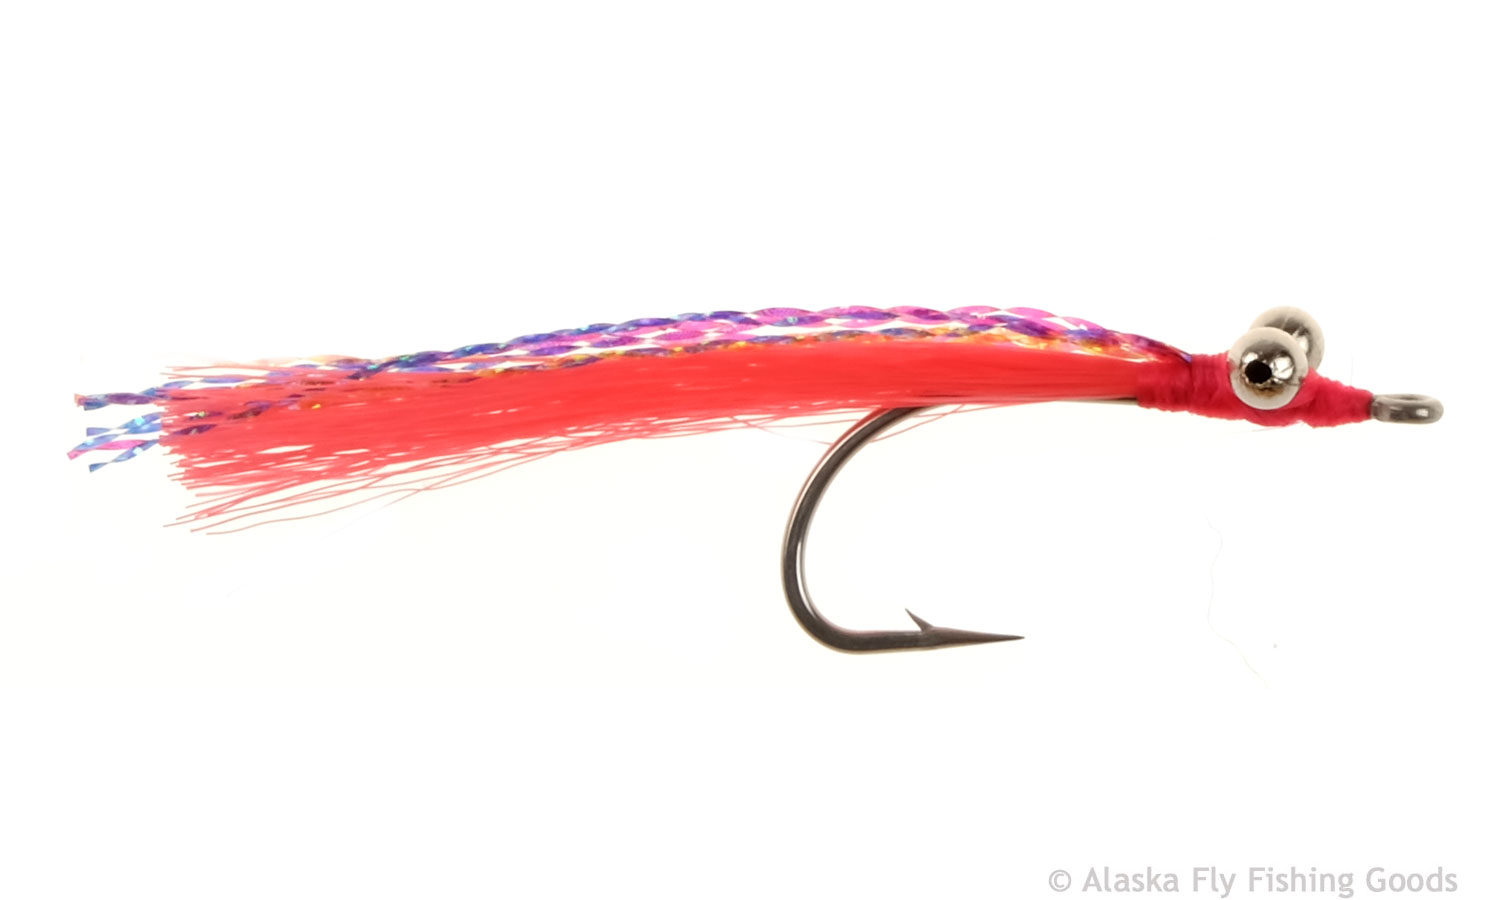 Minkie Pink - Salmon Fishing Flies from Helmsdale Company